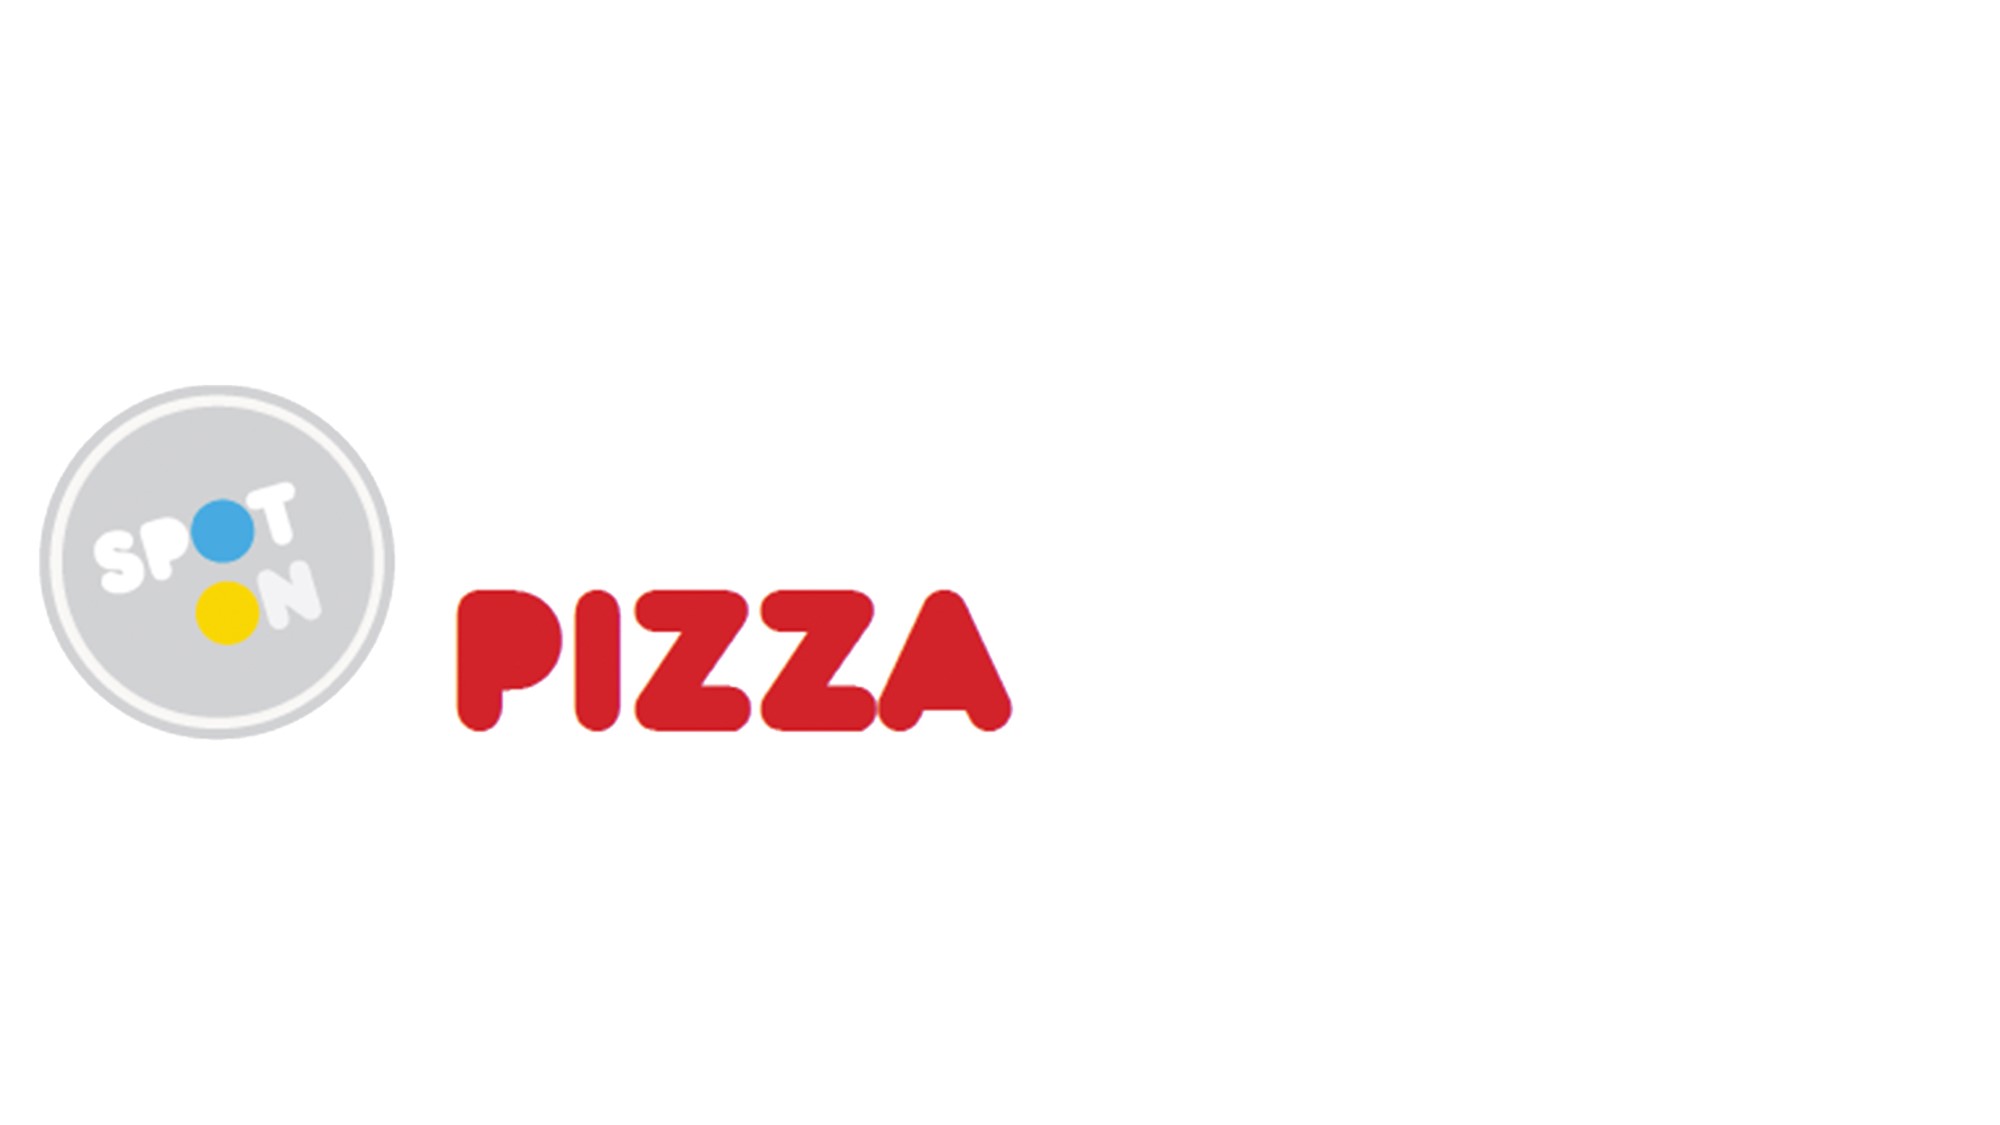 Pizza - Norsk Luthersk Misjonssamband